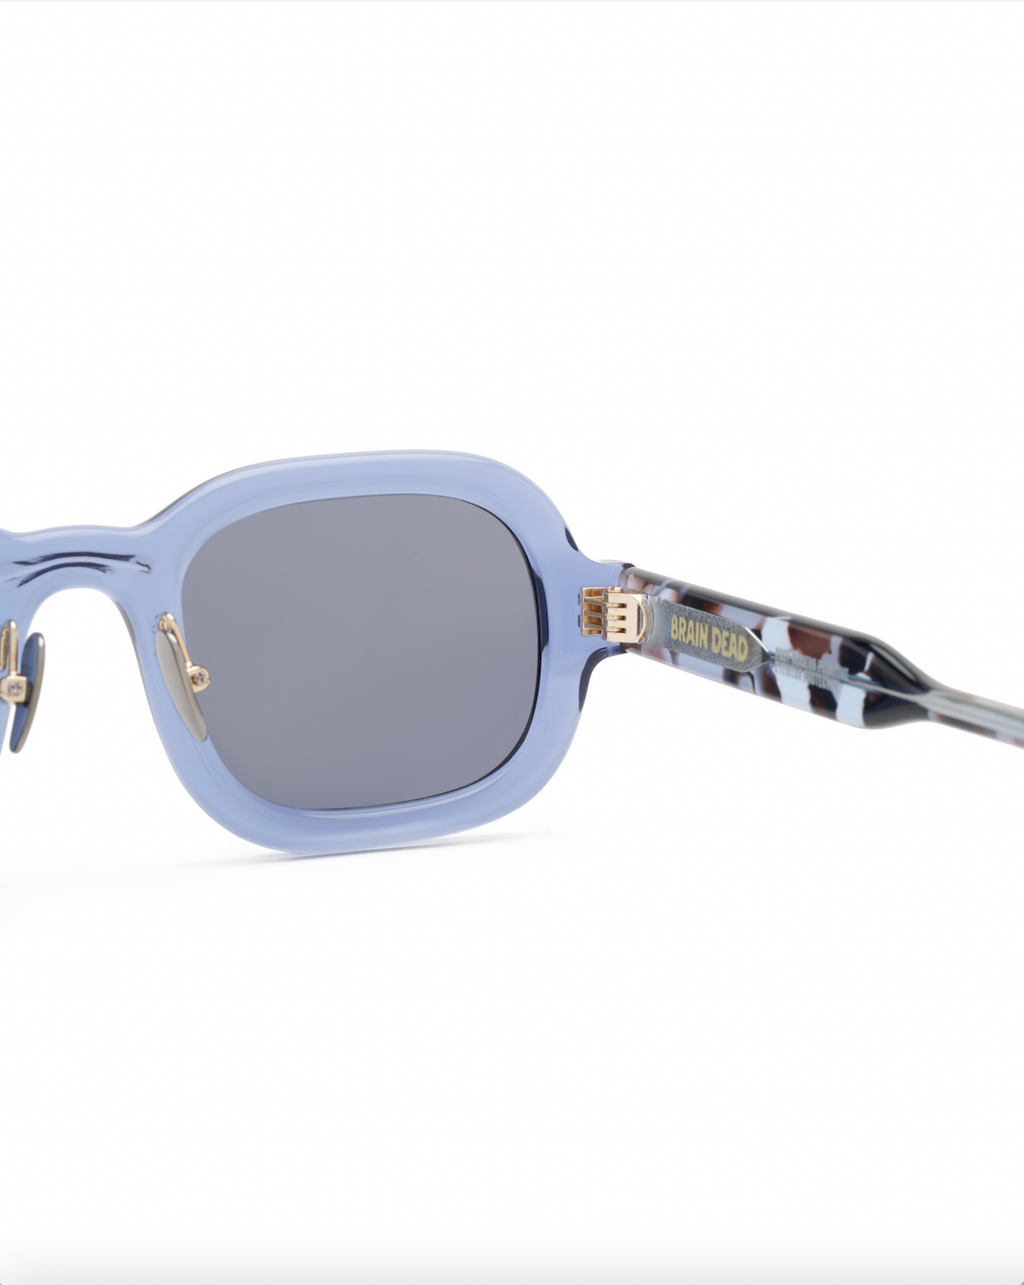 Newman Post Modern Primitive Eye Protection Sunglasses - Deep Sea/Grey 3